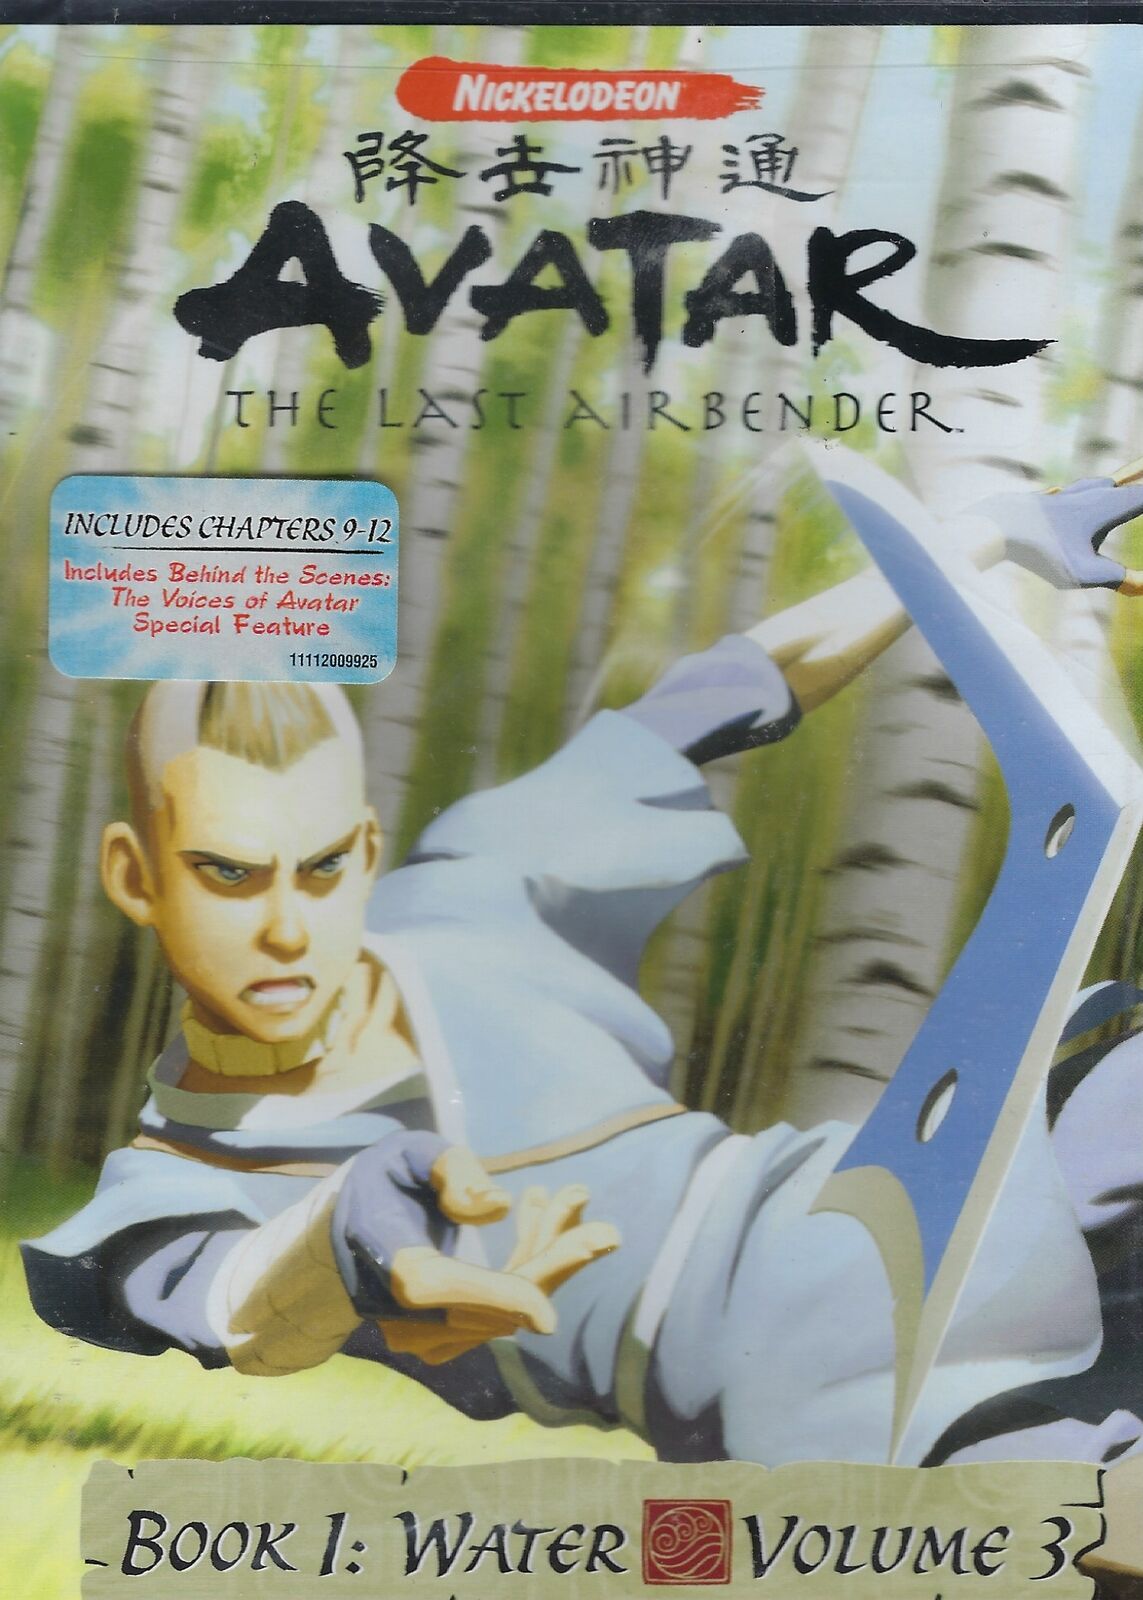 Avatar The Last Airbender Book 1: Water Volume 3 DVD